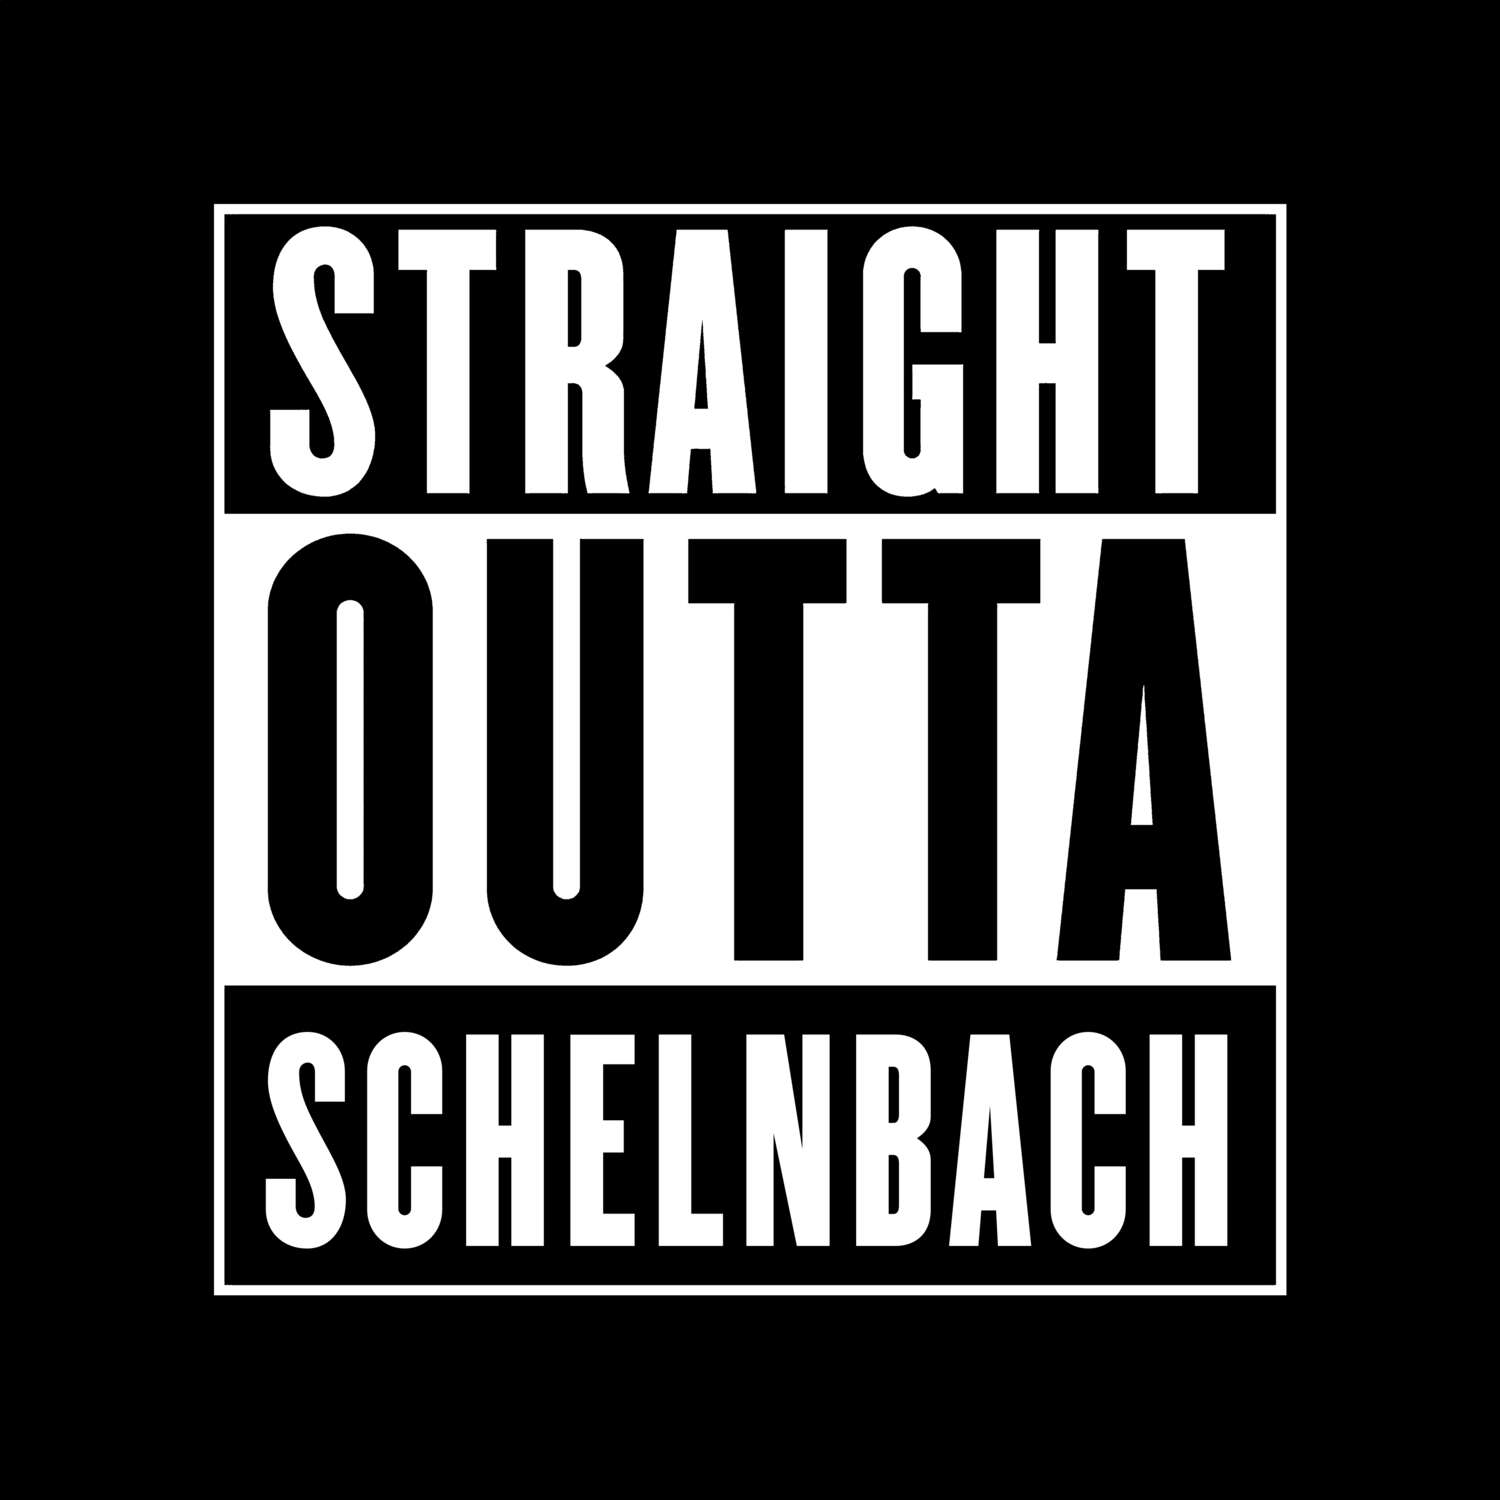 Schelnbach T-Shirt »Straight Outta«